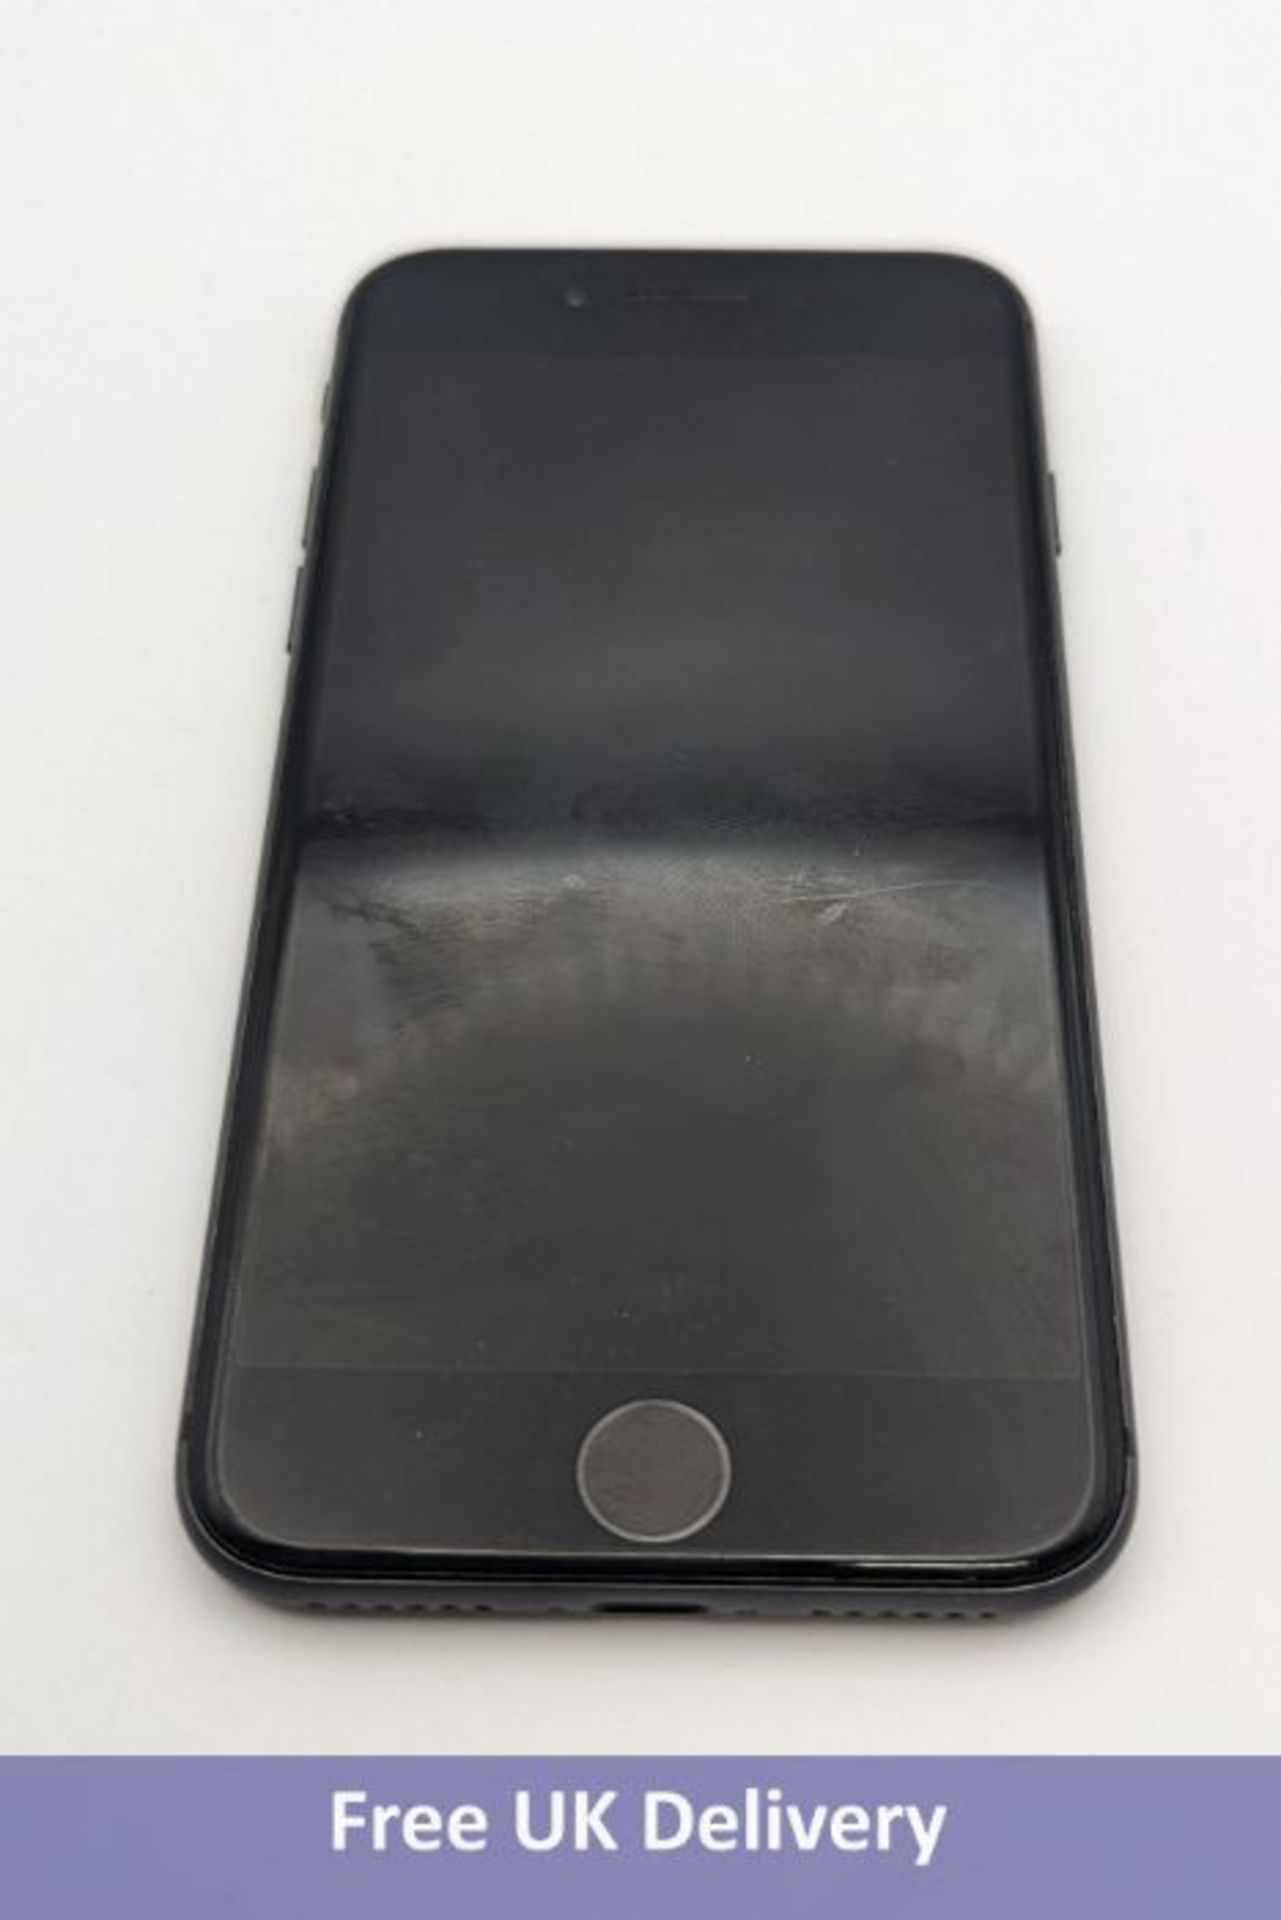 Apple iPhone 8 64GB, MQ6G2B/A. Used, no box or accessories. Checkmend clear, ref. CM18549940-66957